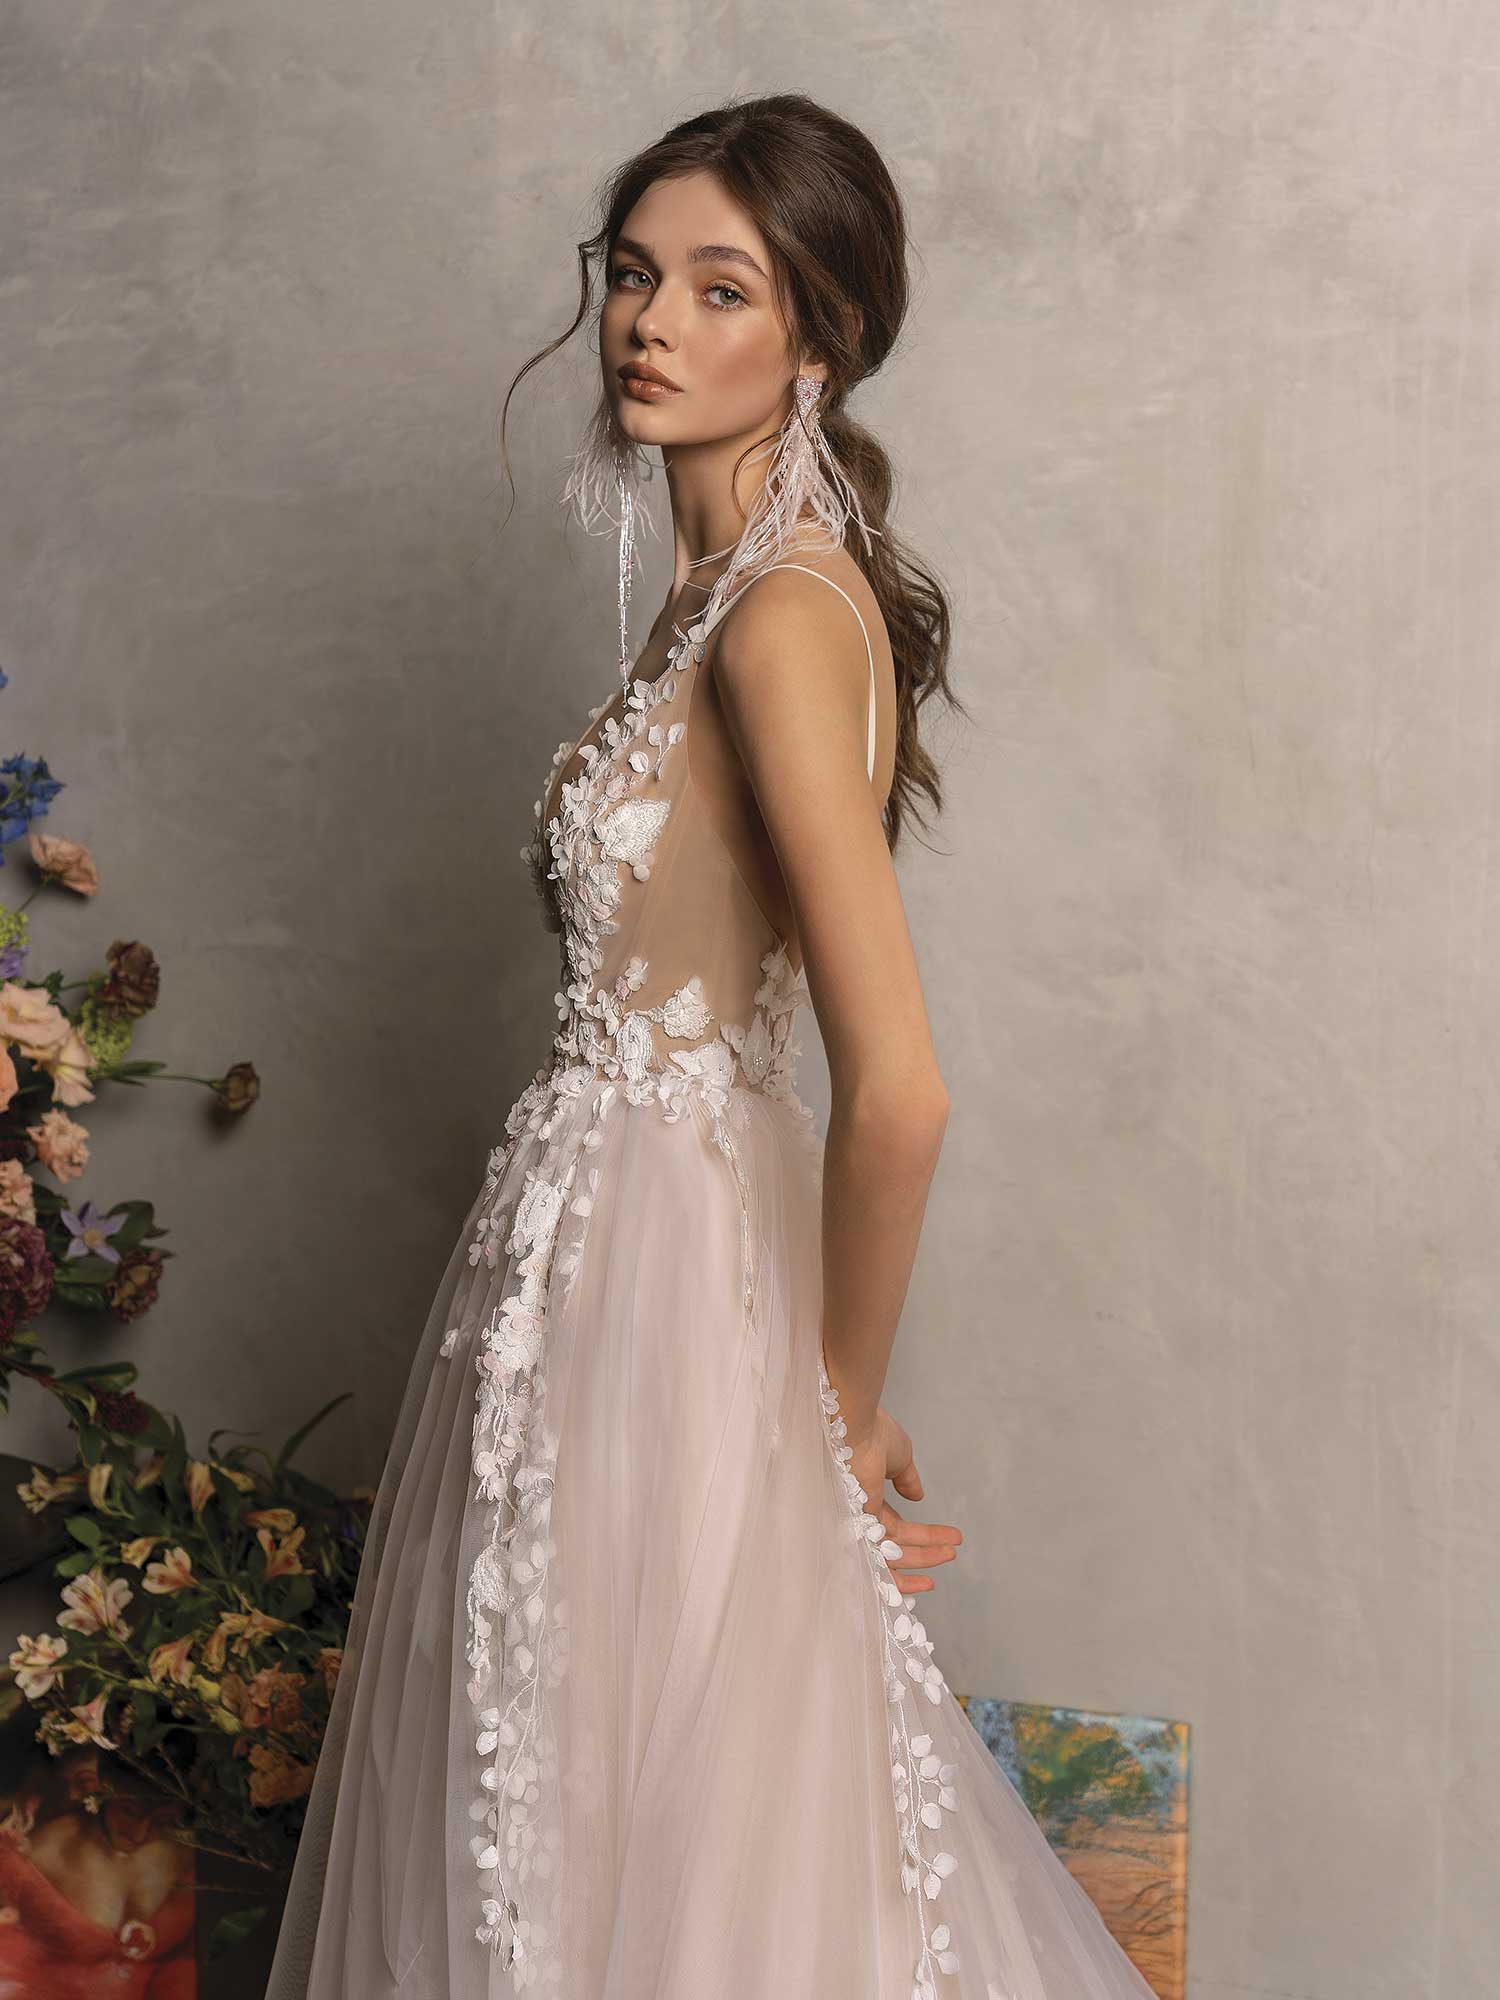 A-line wedding dress with plunging neckline